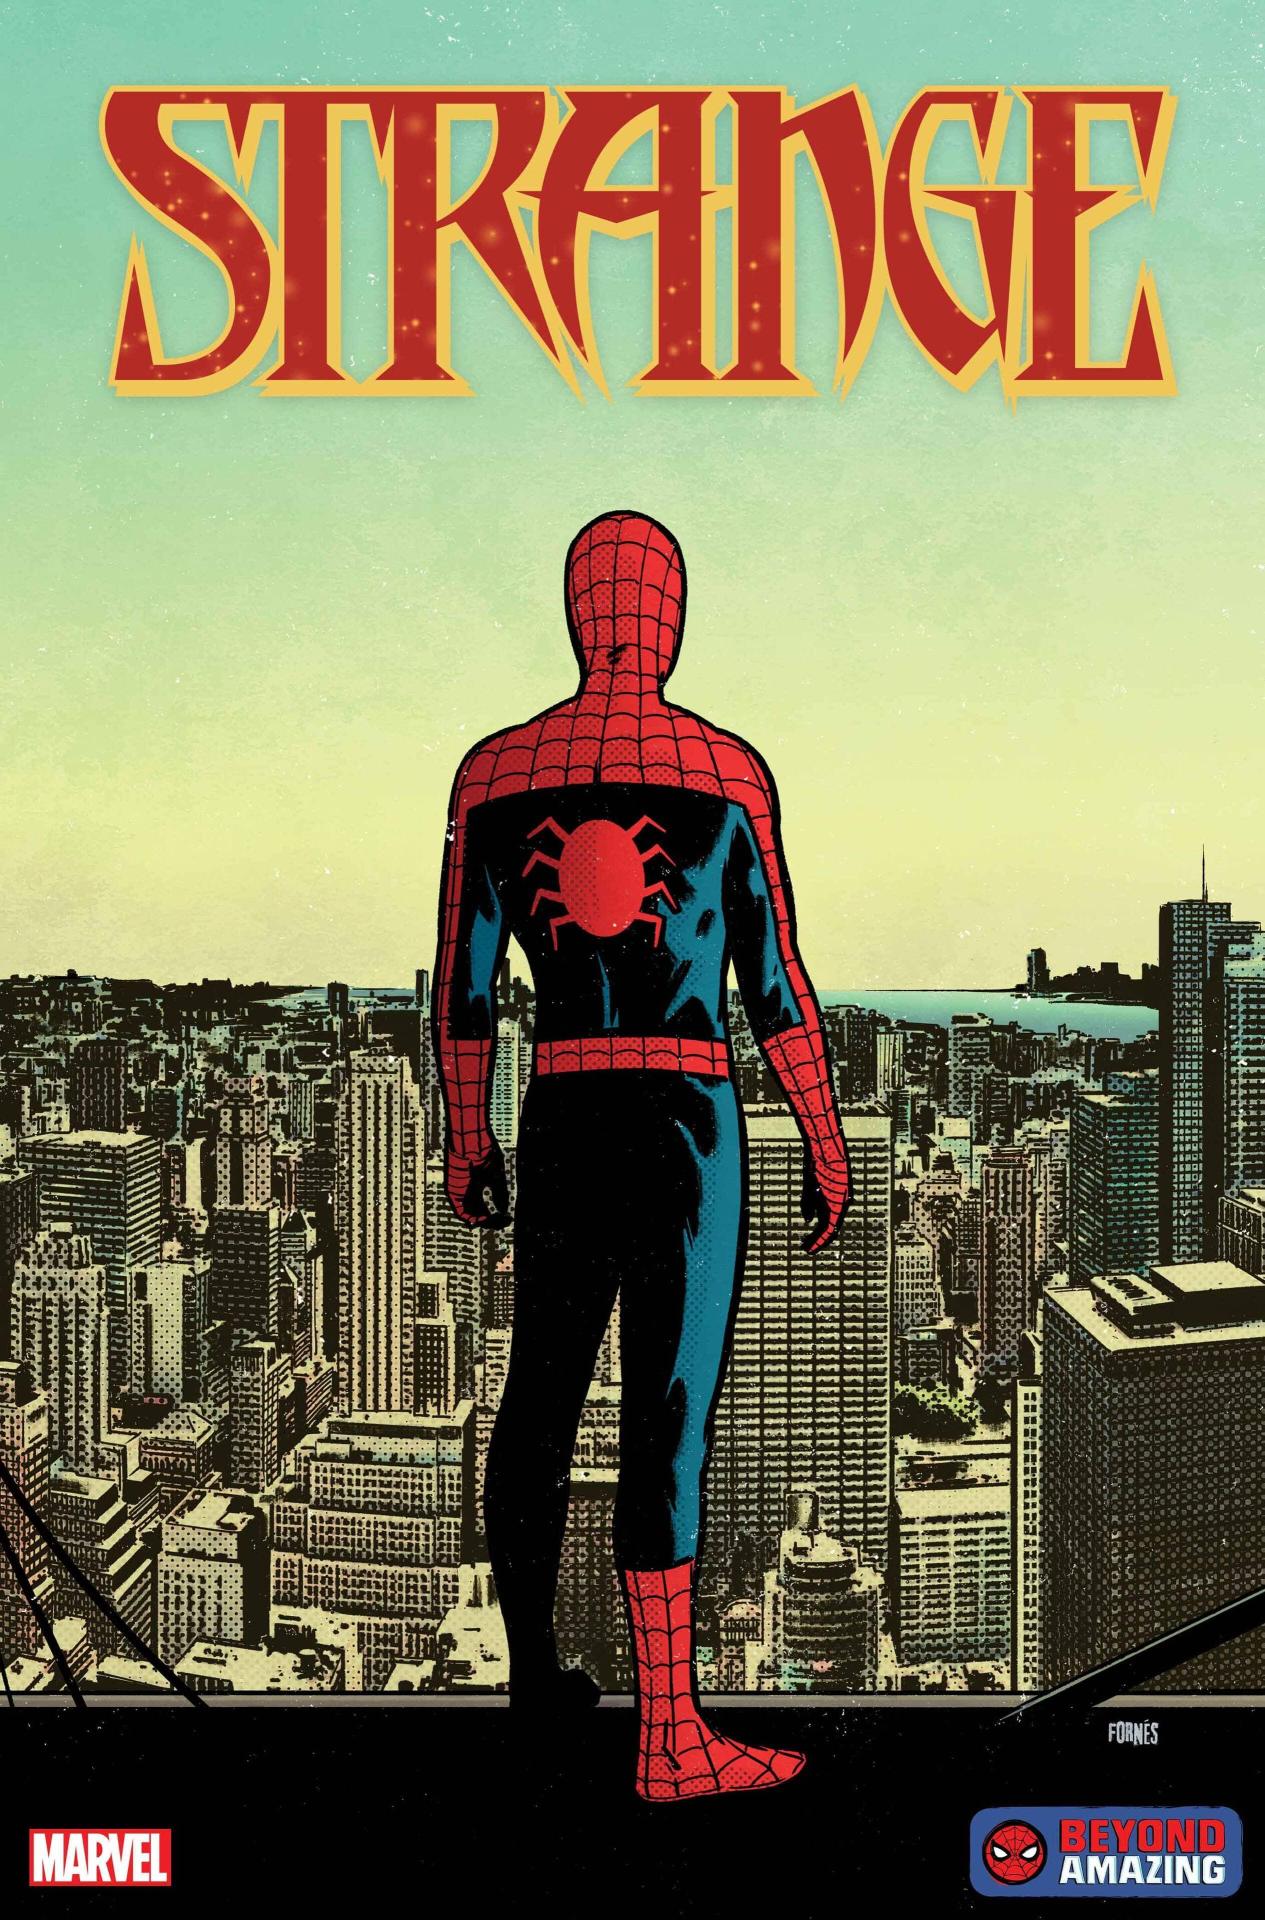 STRANGE #6 BEYOND AMAZING VARIANT COVER by JORGE FORNÉS #spider-man#variant covers#beyond amazing#jorge fornes#marvel#marvel comic #comic book art  #Comfort Food Spider-Man